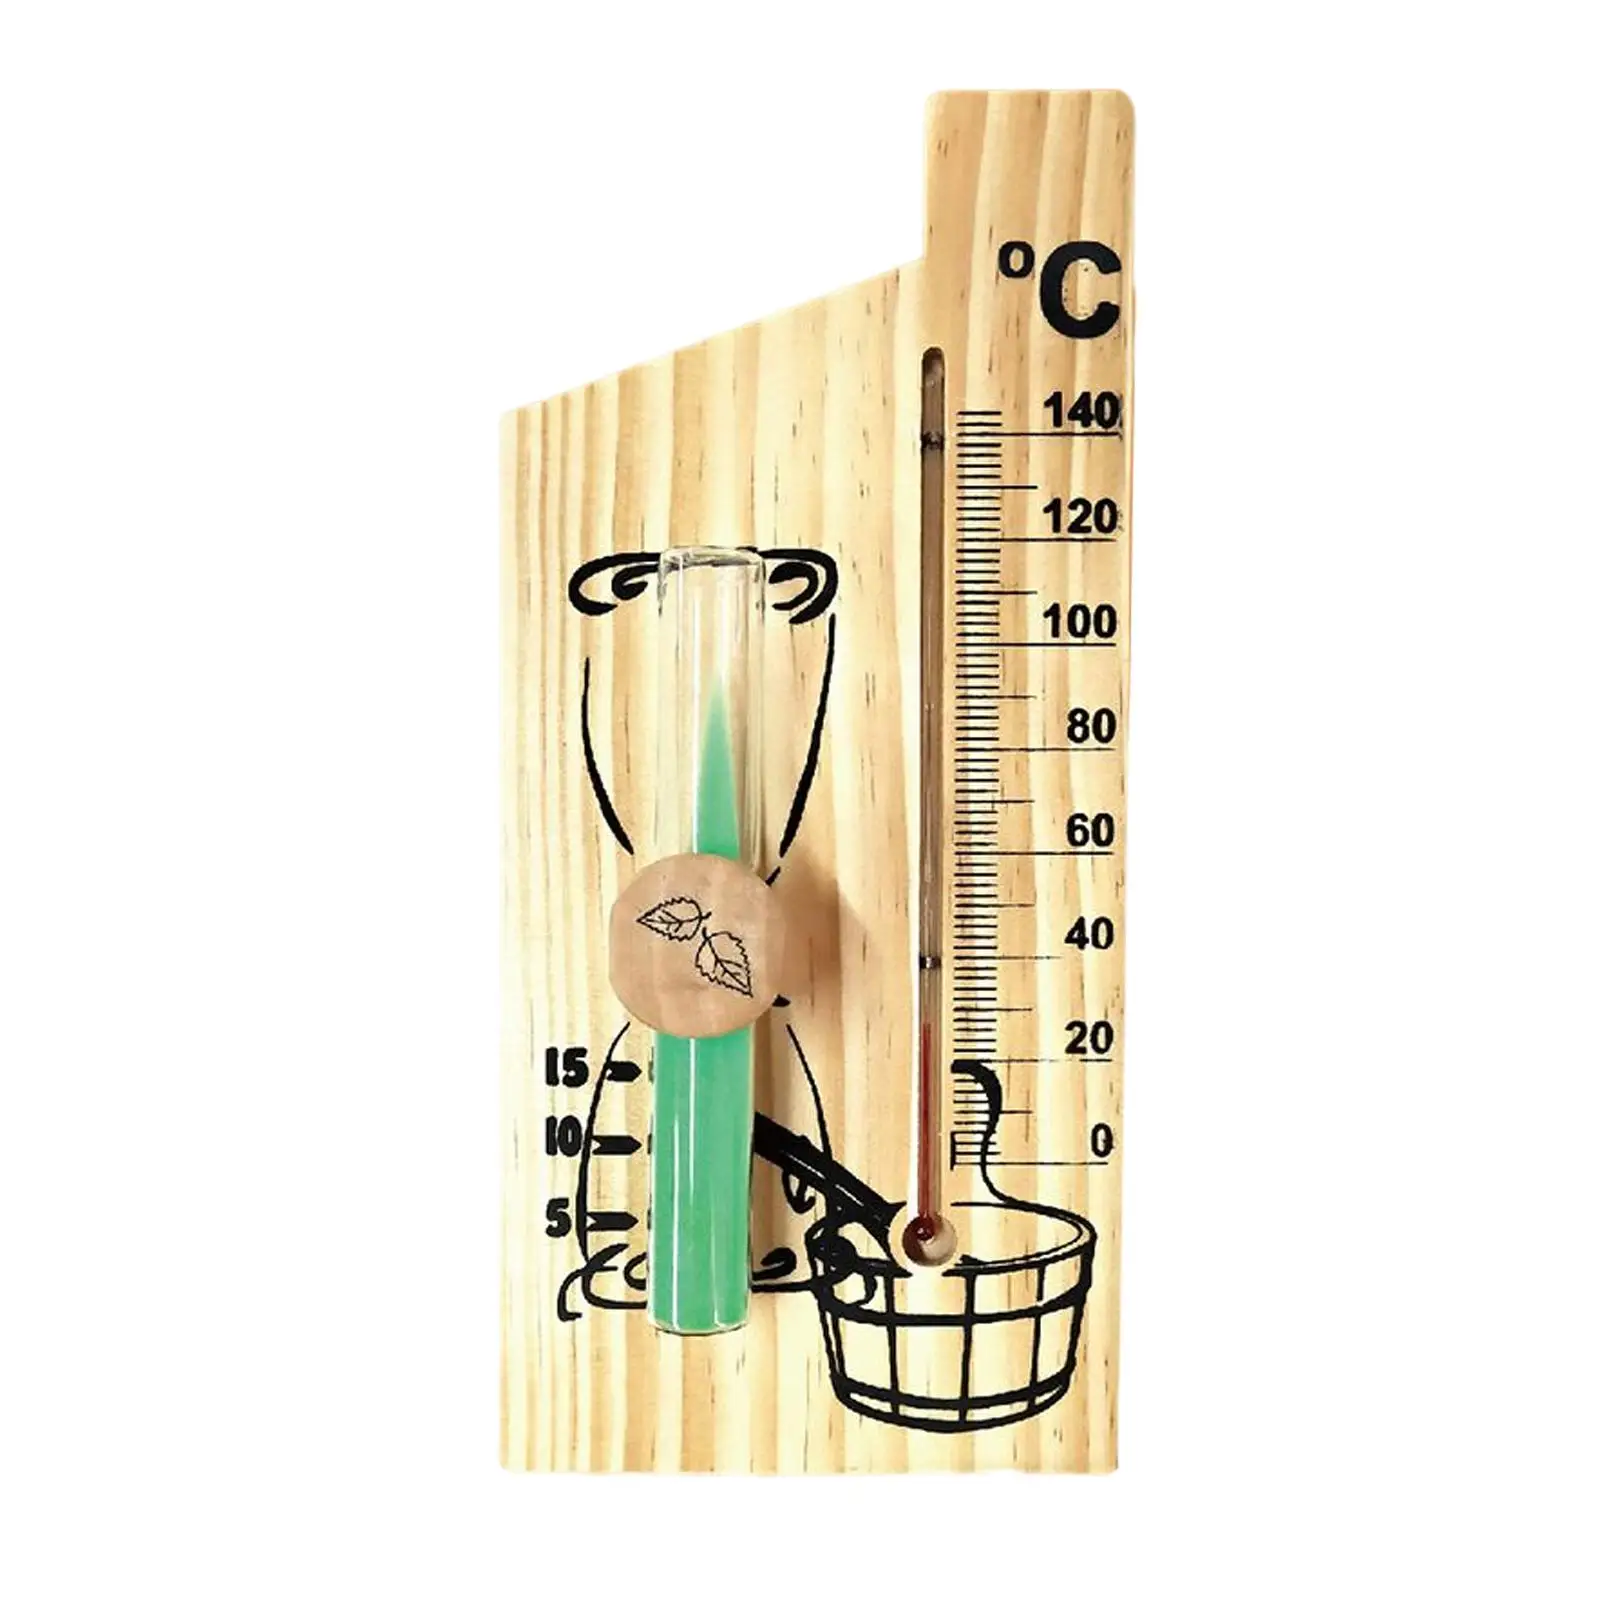 Sauna Thermometer Temperature Measurement Tools Sand Clock 15 Min & Sauna Sand Timer Sauna Room Accessories for Steam Room Hotel